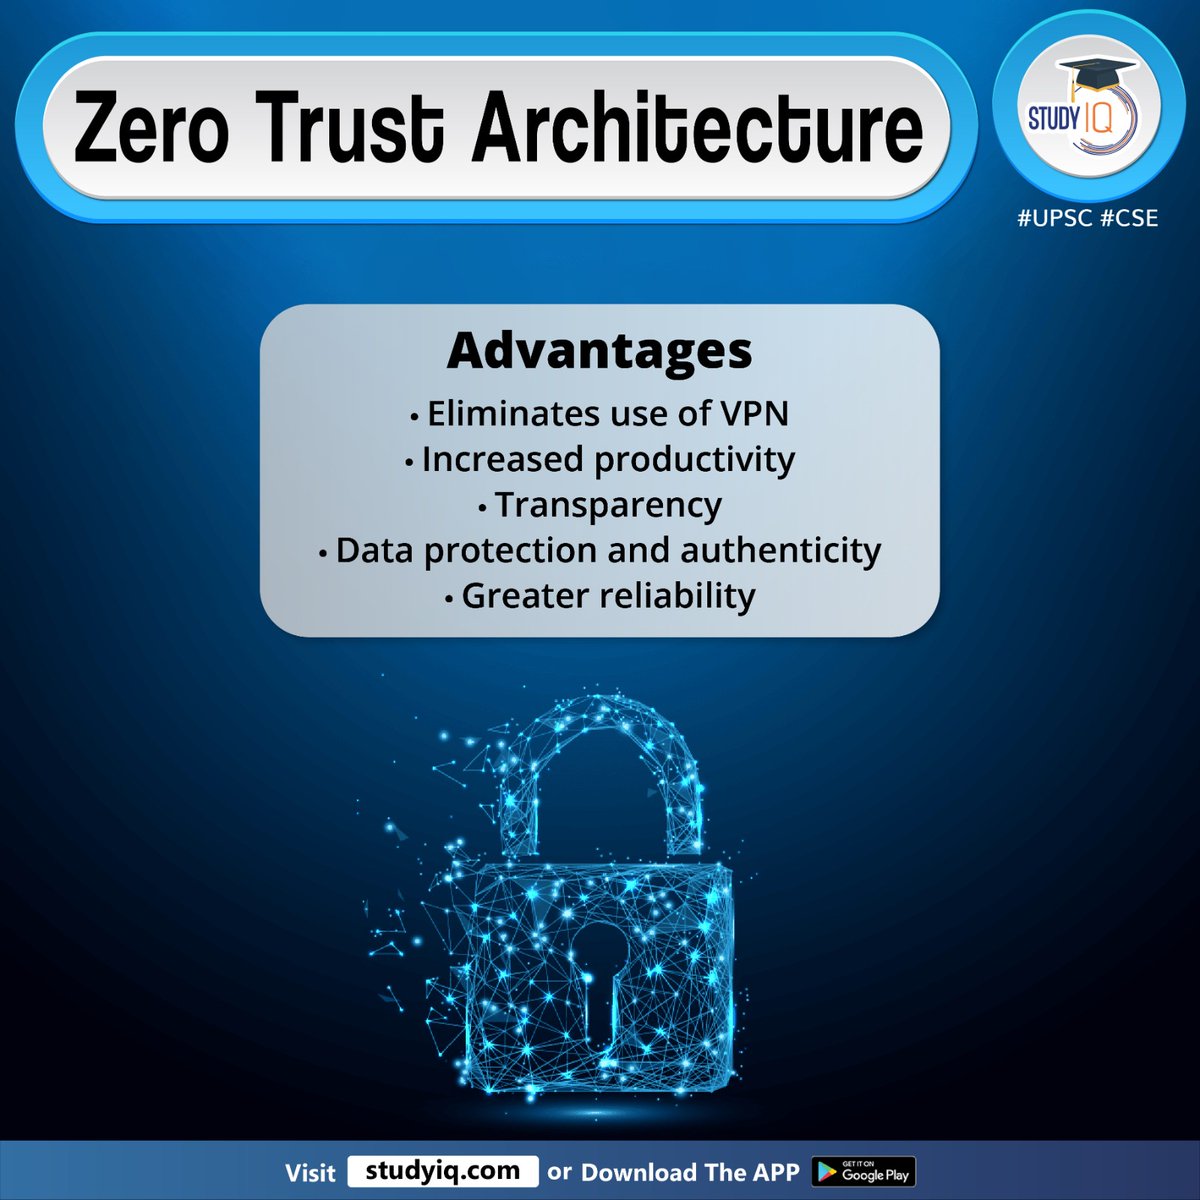 Zero Trust Architecture 

#zerotrustarchitecture #zerotrust #india #datasecurity #datapool #cybersecurity #digitalinteraction #ai #eliminatesuseofvpn #vpn #dataprotection #upsc #cse #ips #ias